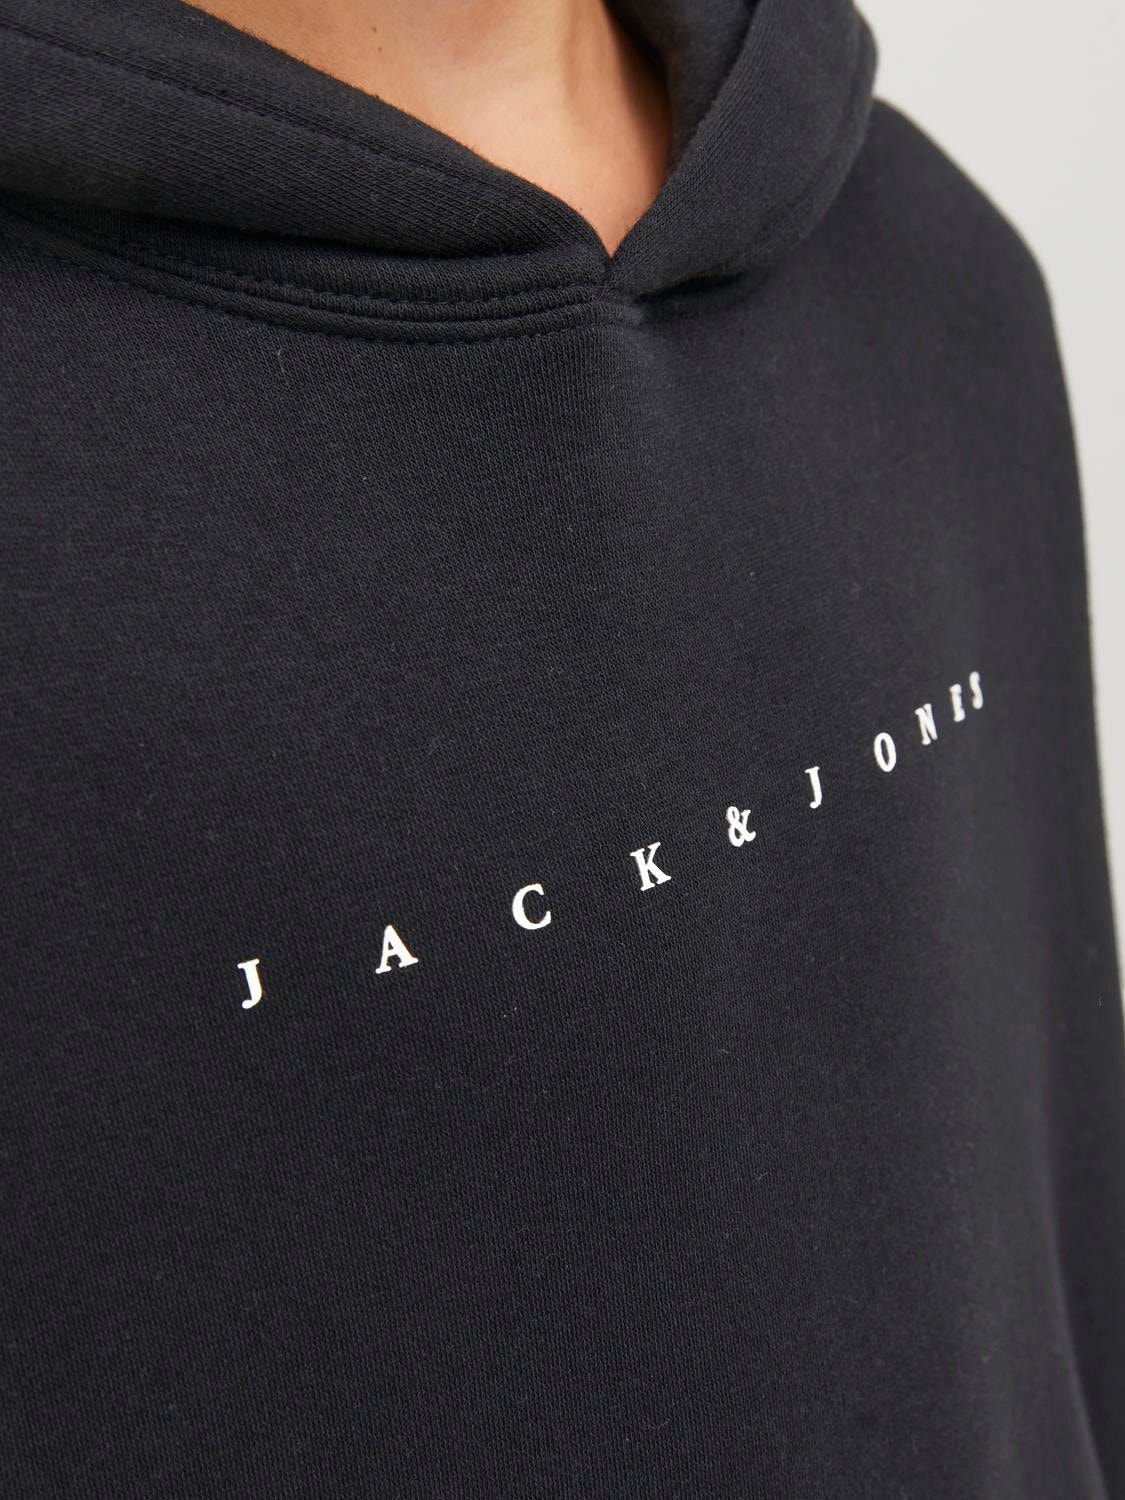 Jack & Jones Felpa con cappuccio Con logo Per Bambino -Black - 12237468